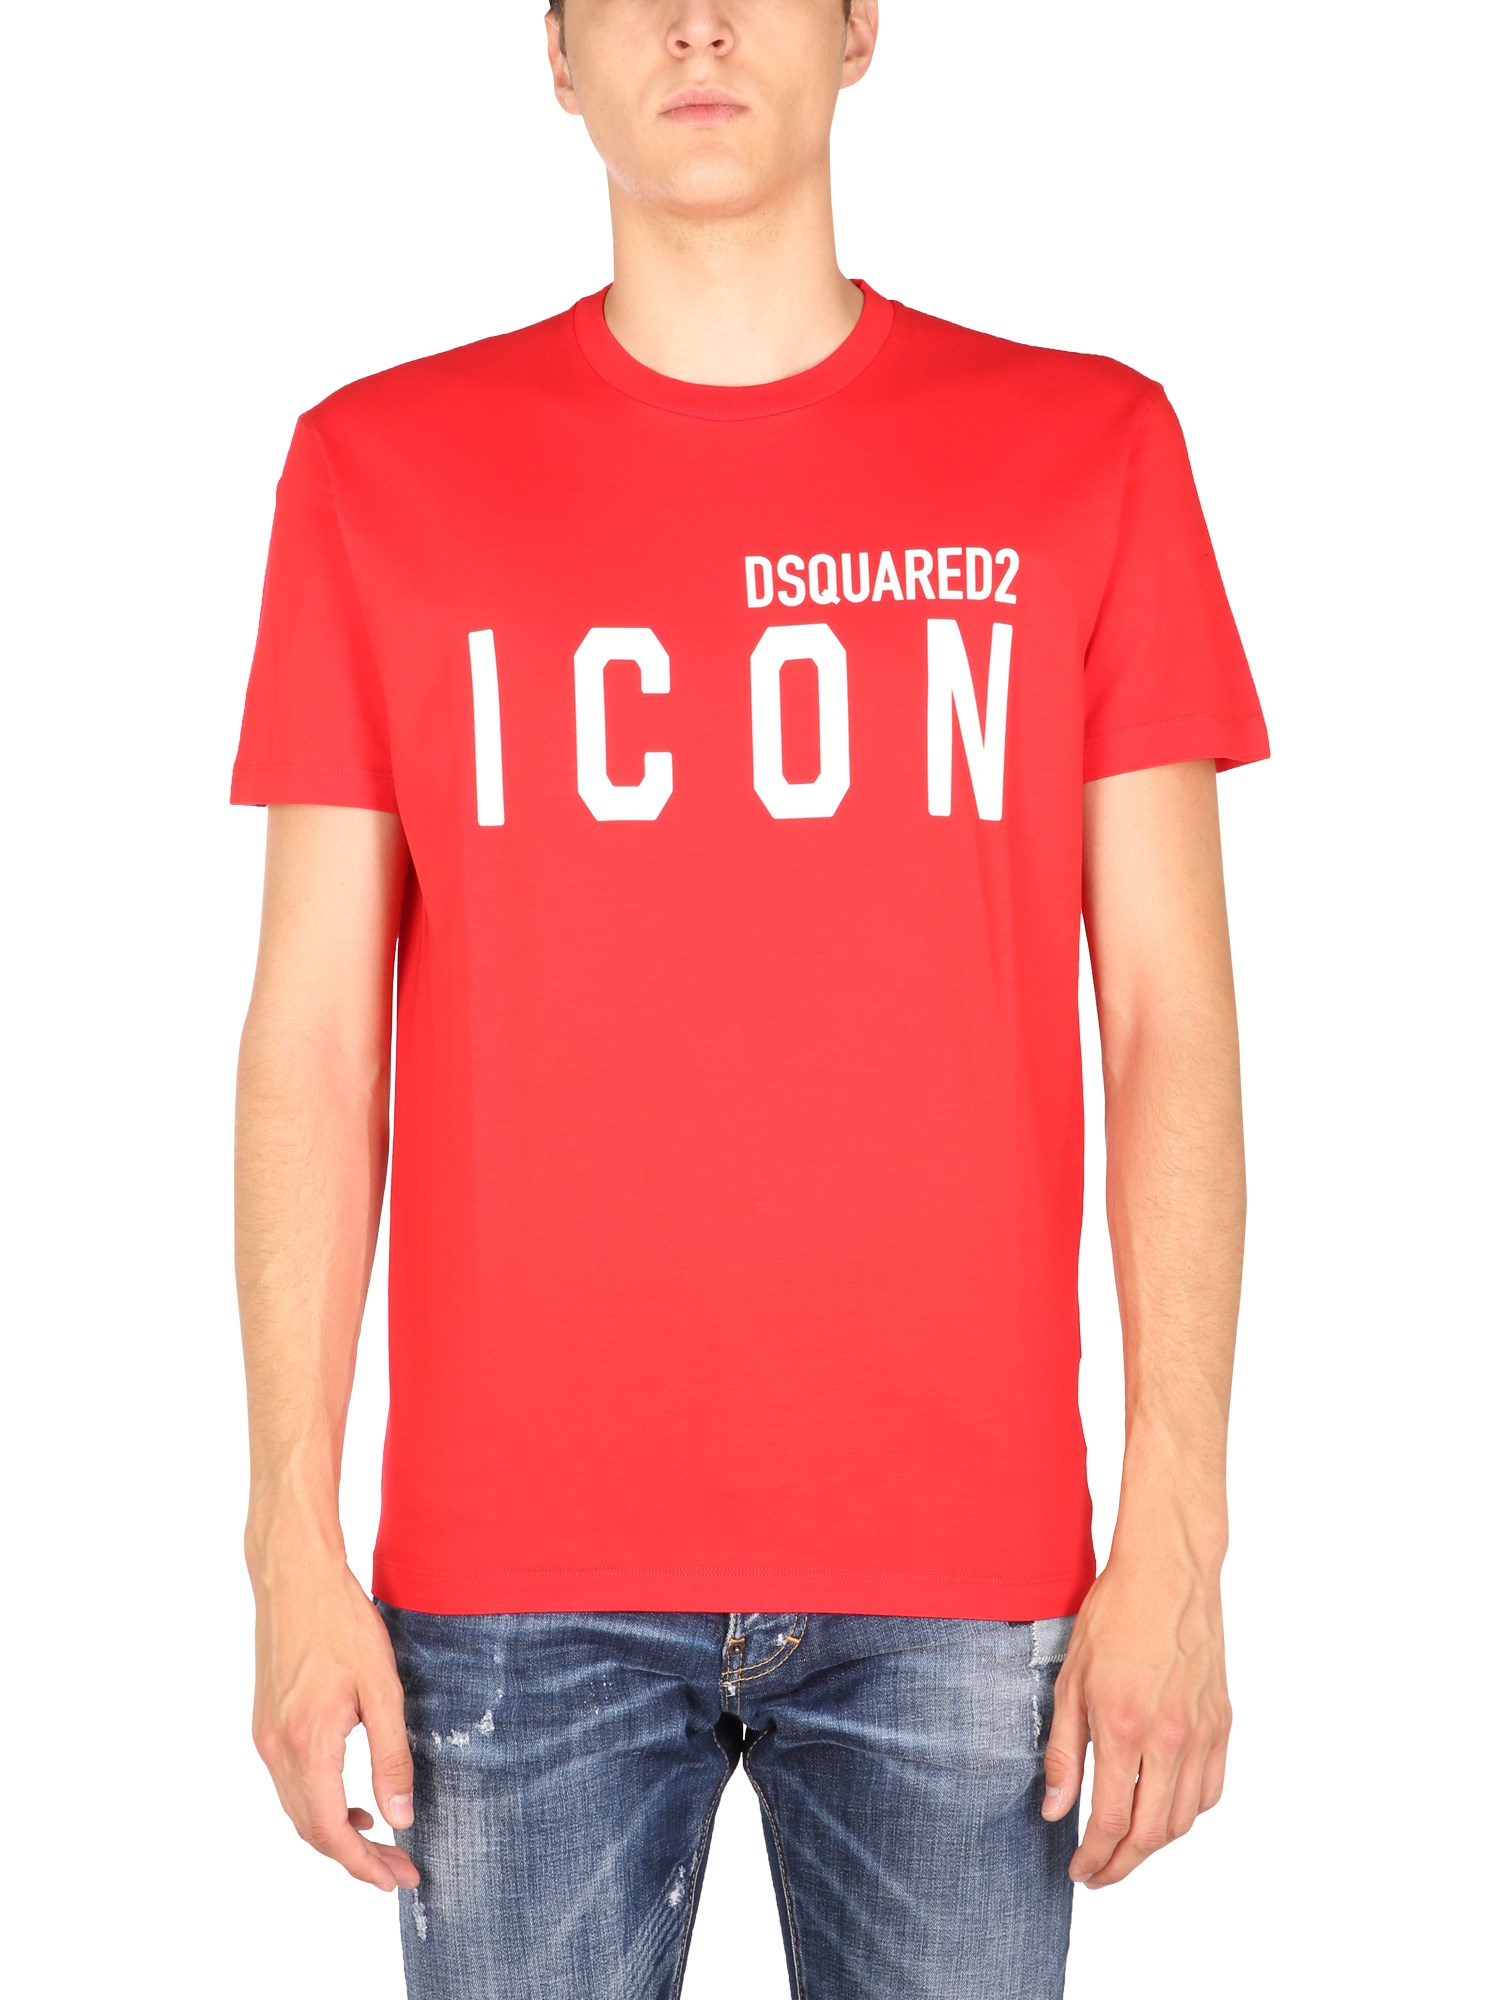 dsquared "icon" crew neck t-shirt